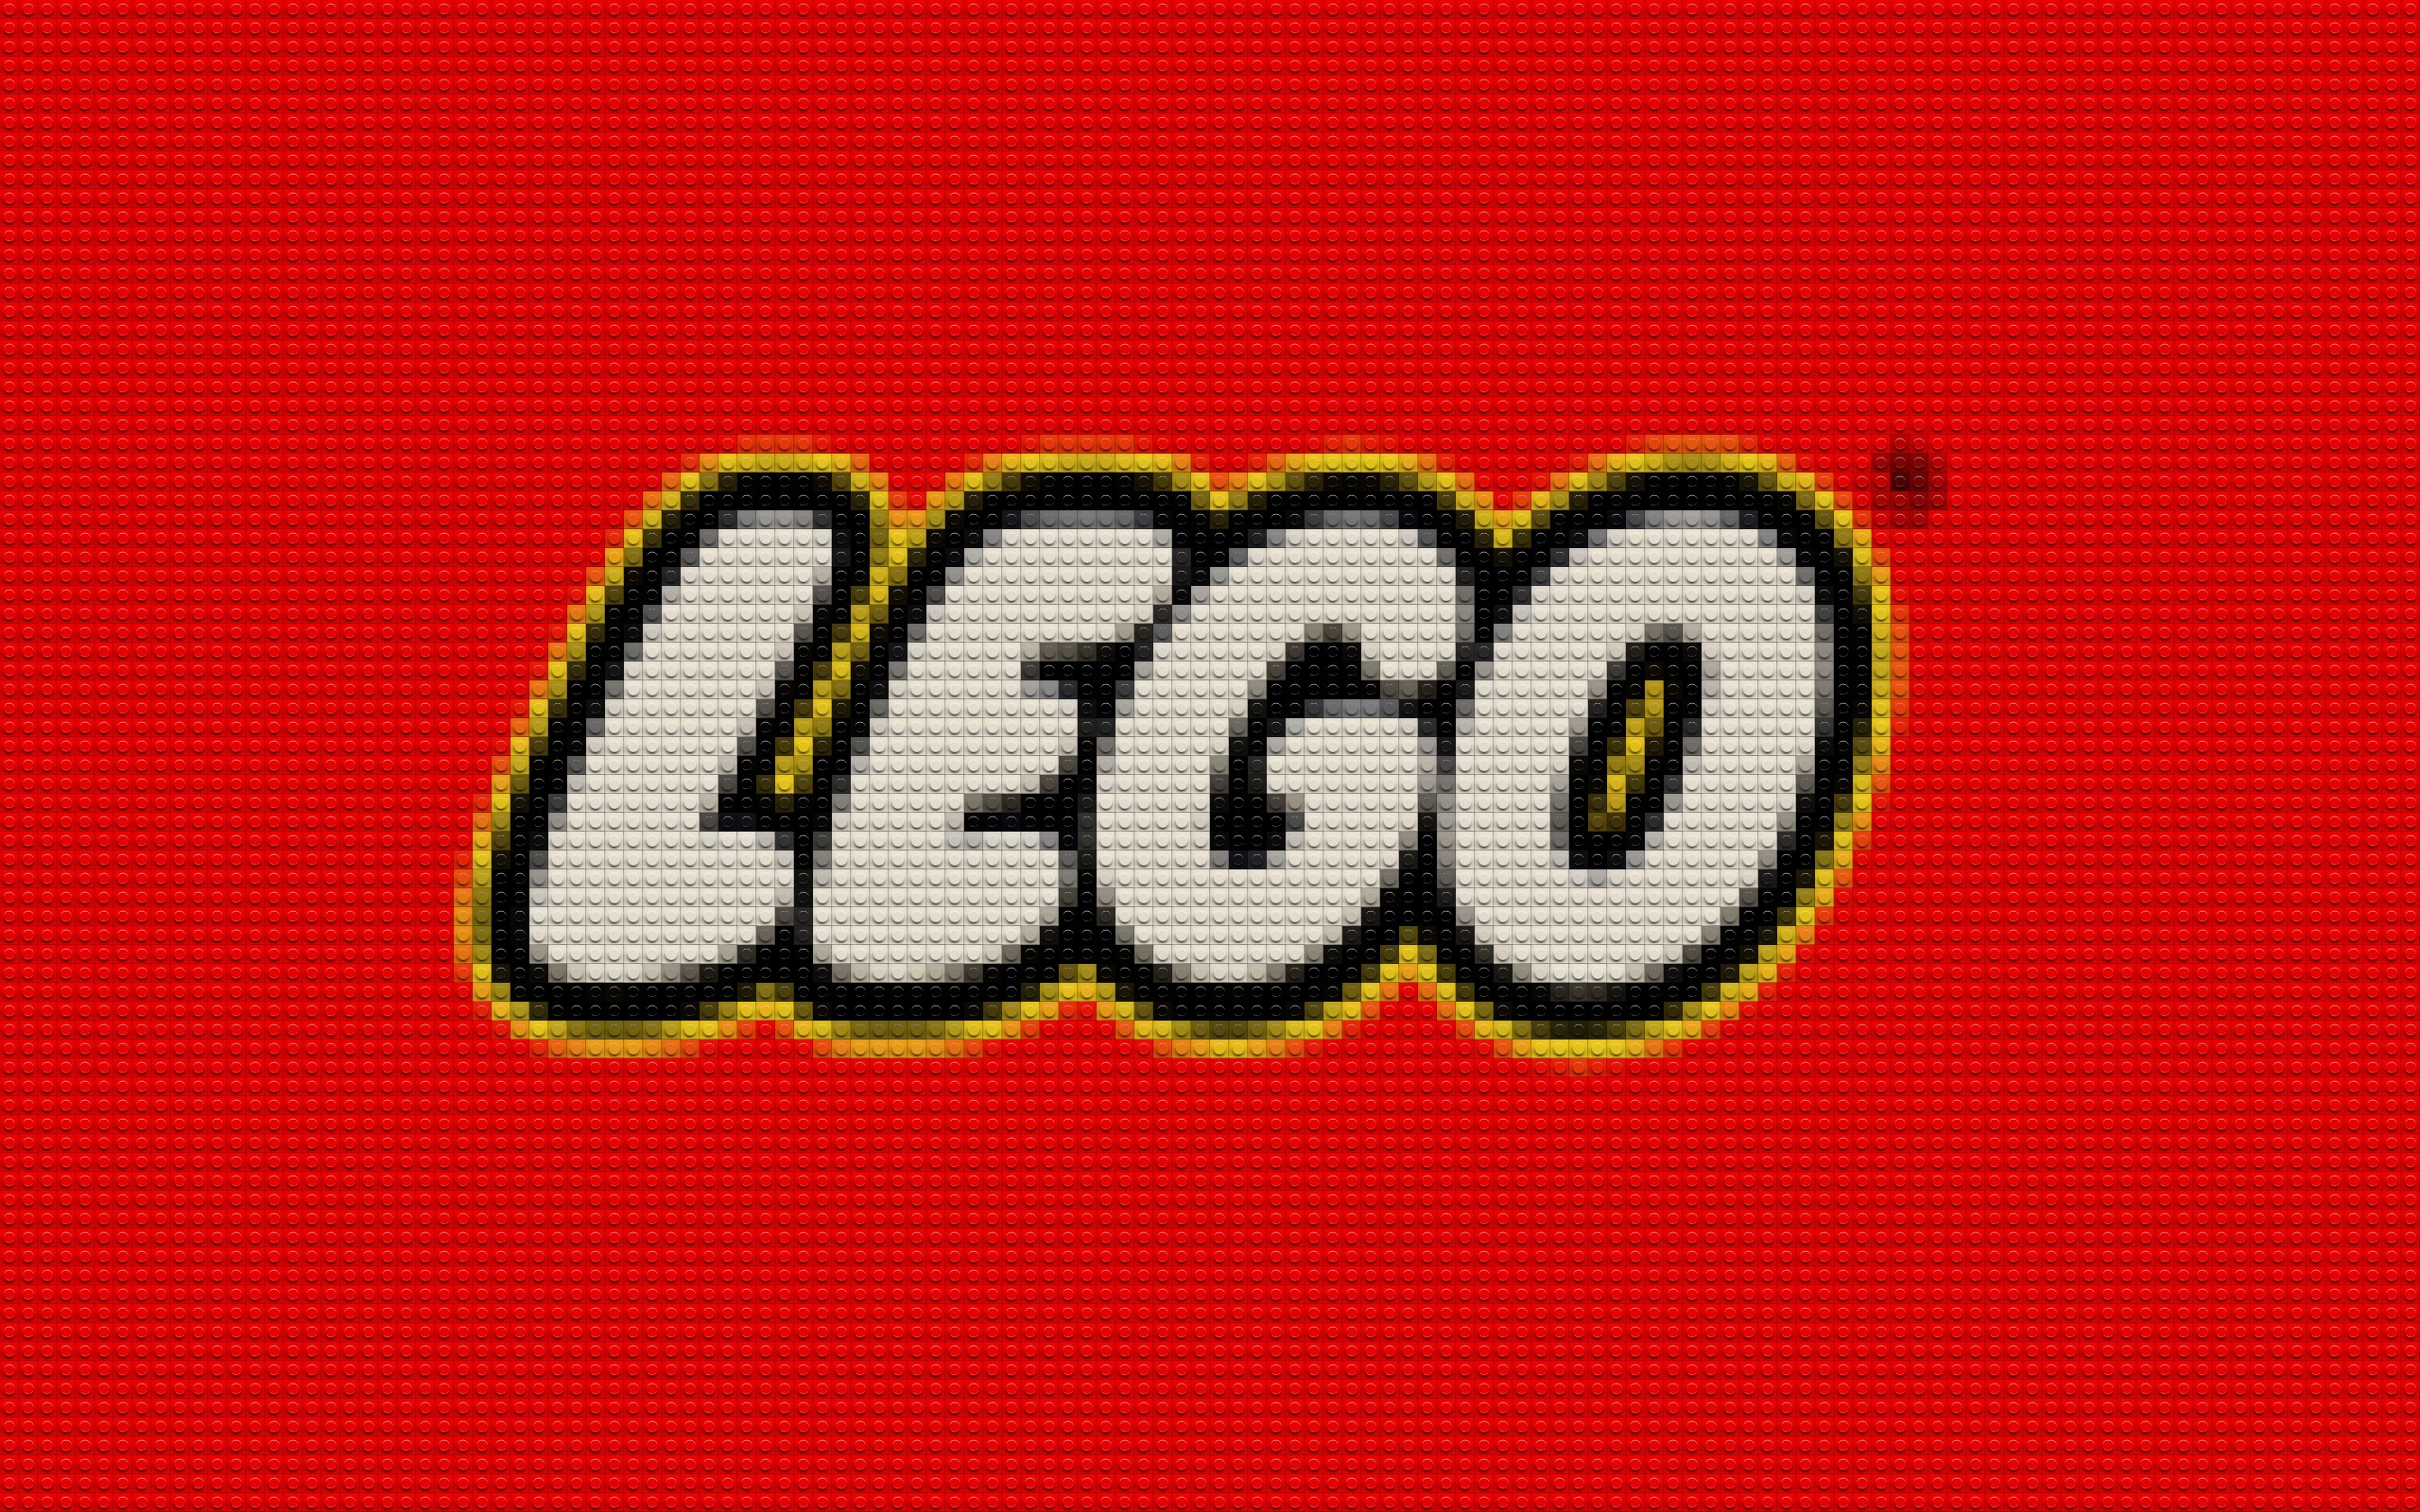 Cool wallpaper of Lego picture of logo designer ImageBankbiz